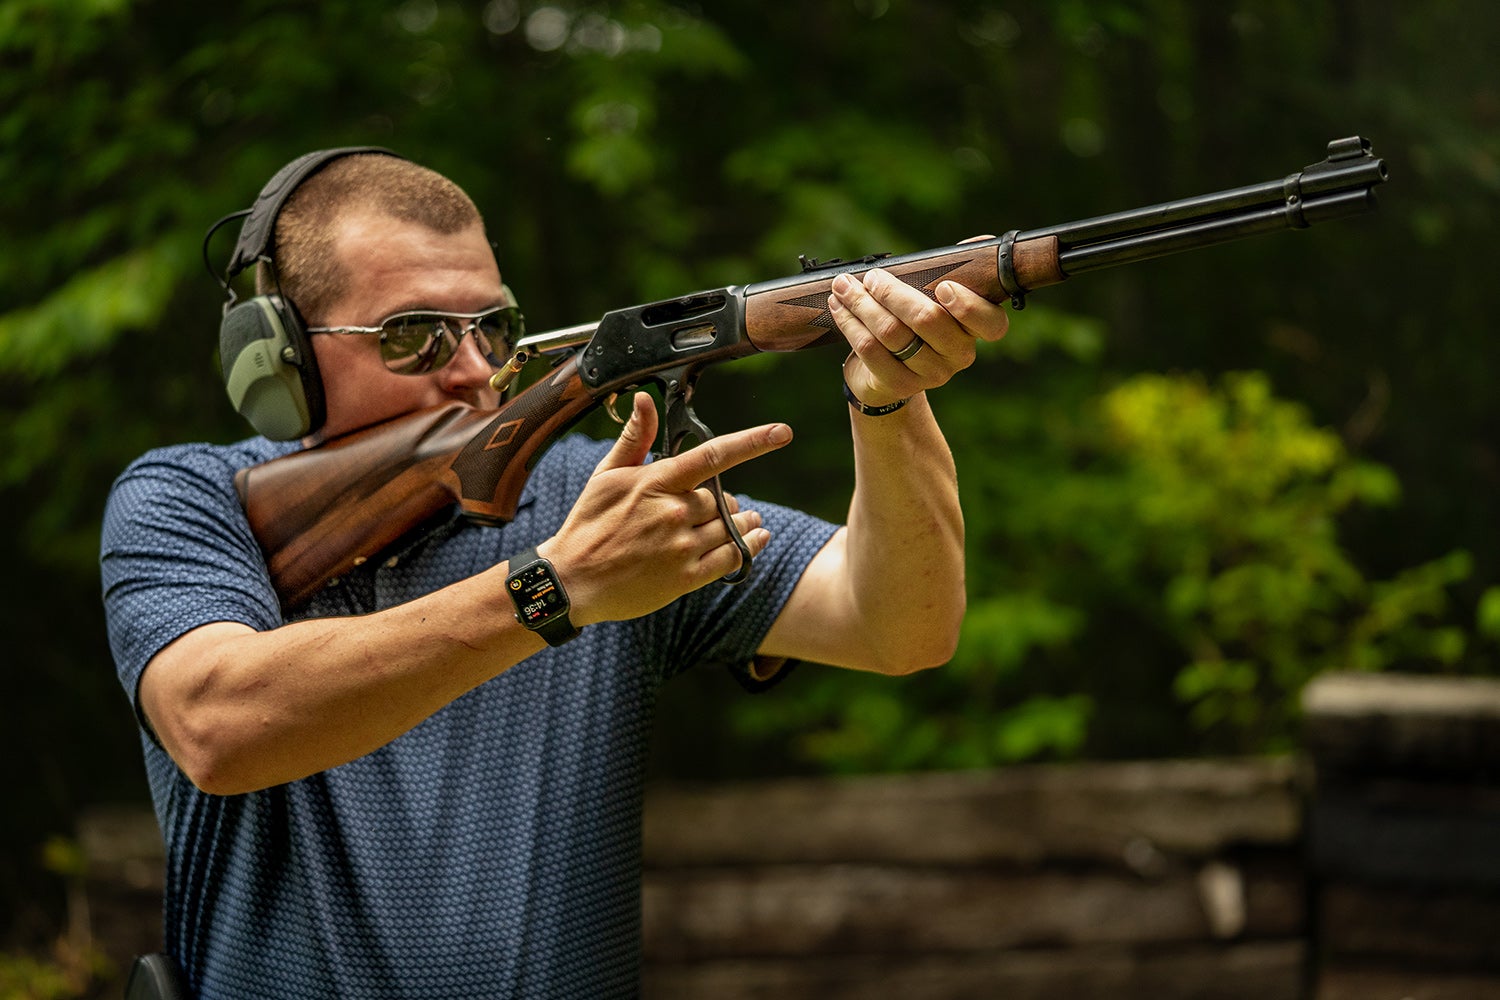 shooter holding marlin rifle runs lever action